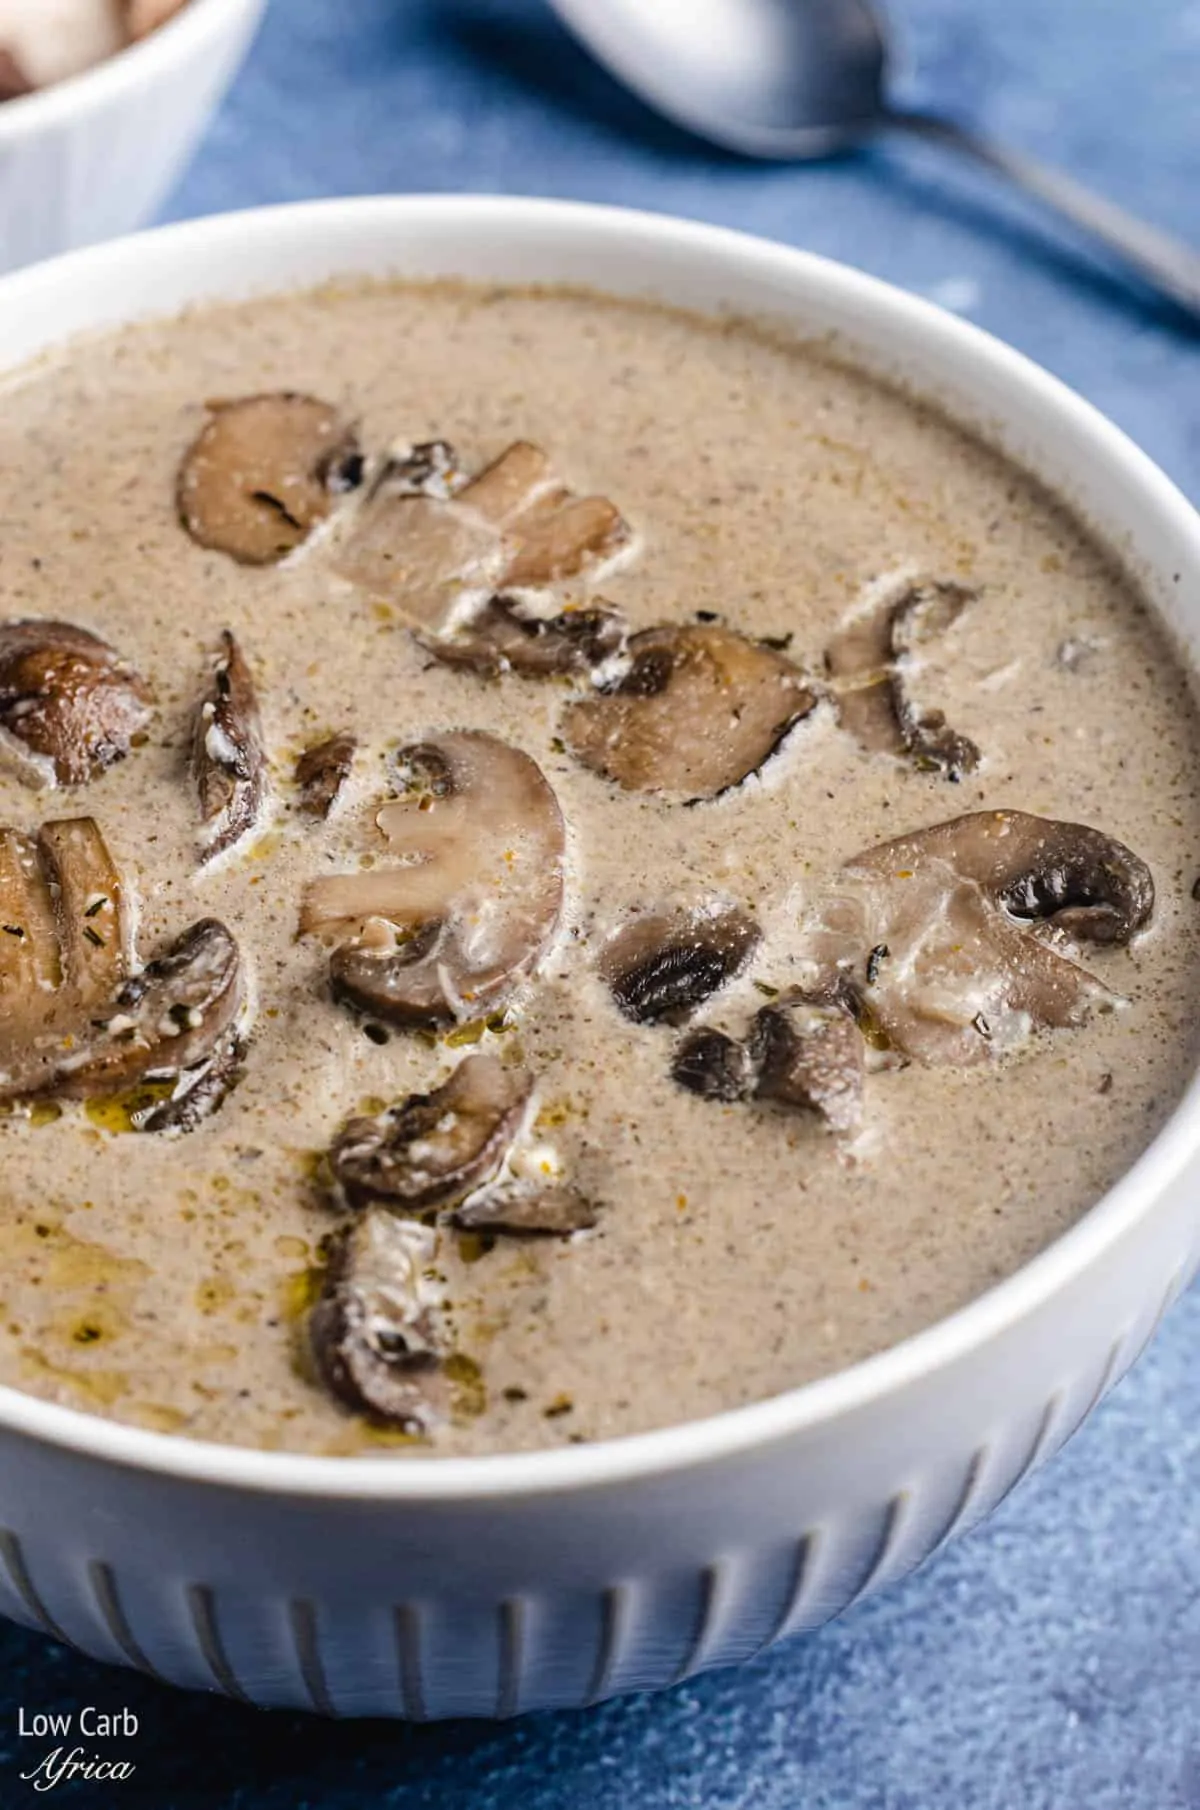 keto mushroom soup with extra mushrooms on top